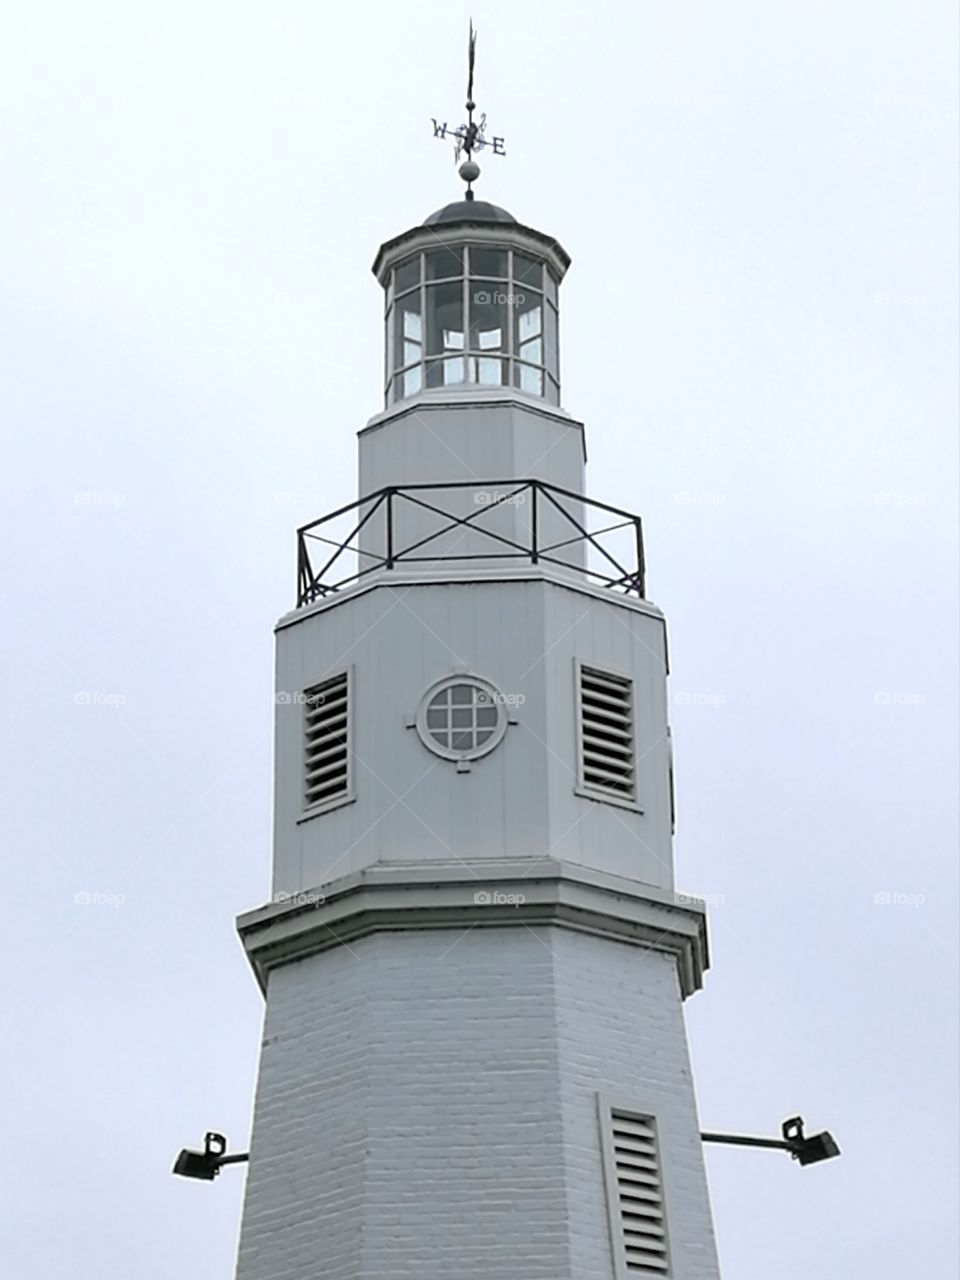 Kimberly Point Lighthouse